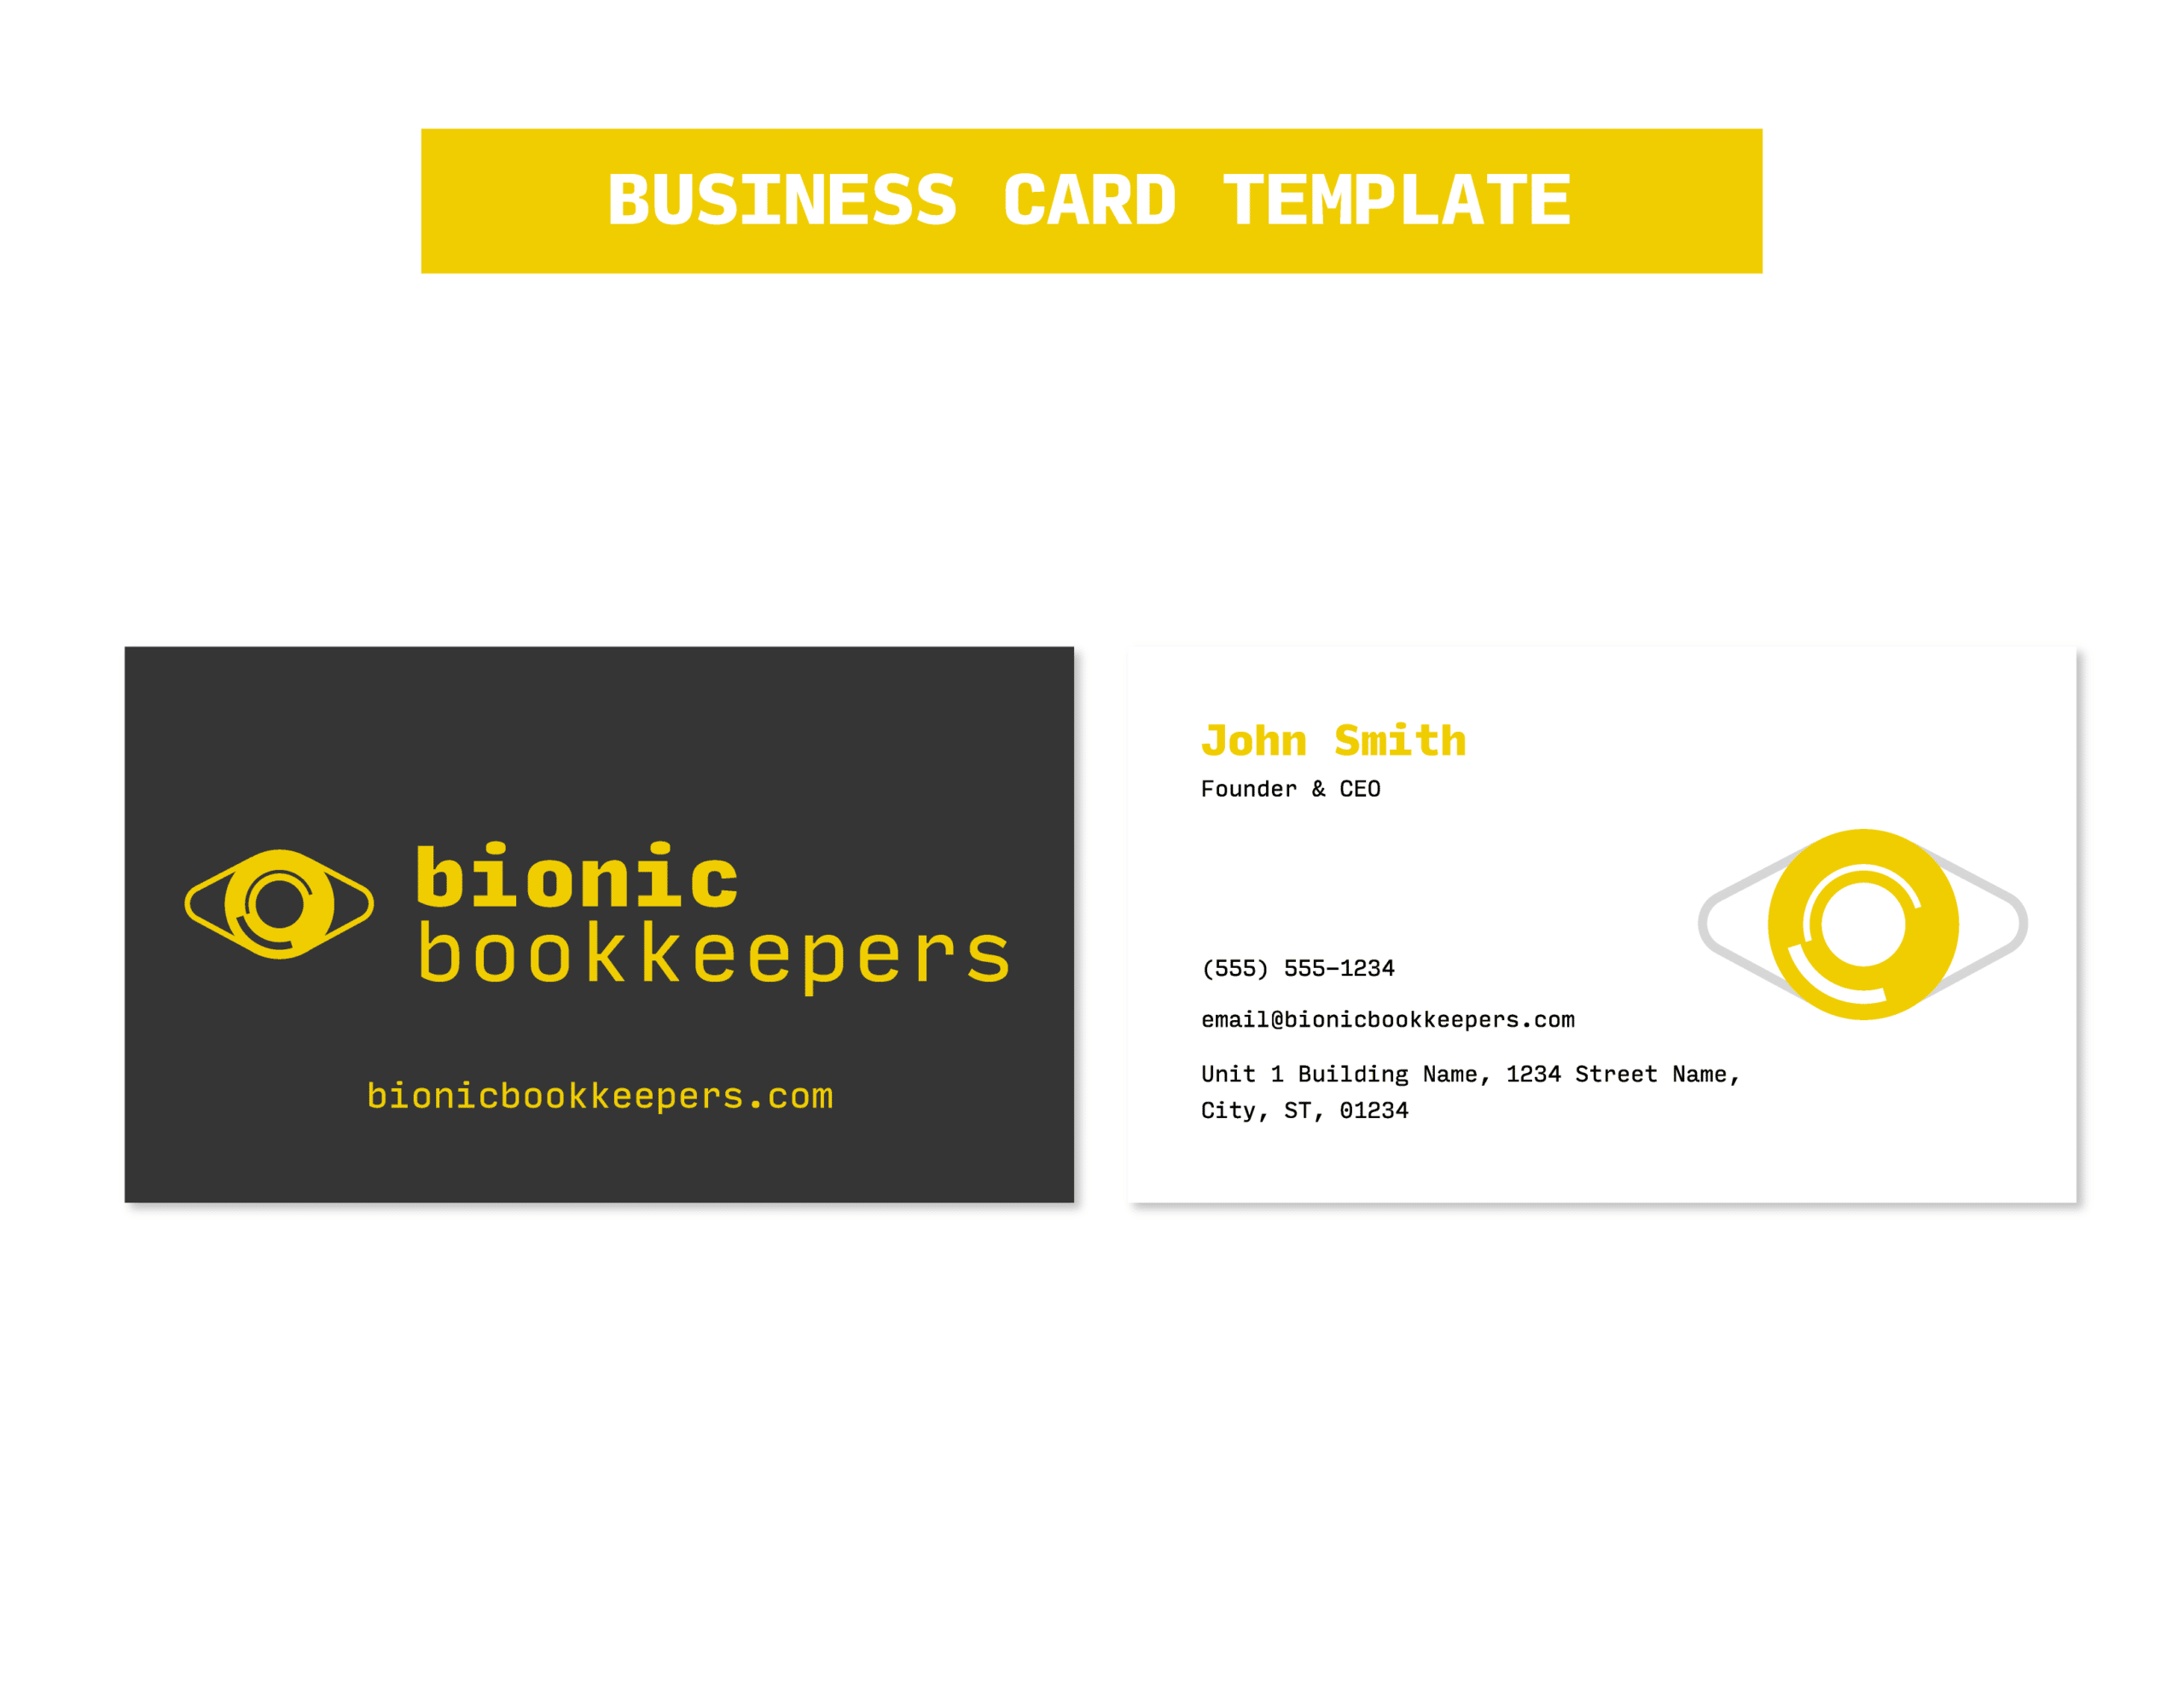 04BionicBK_Business Card Template